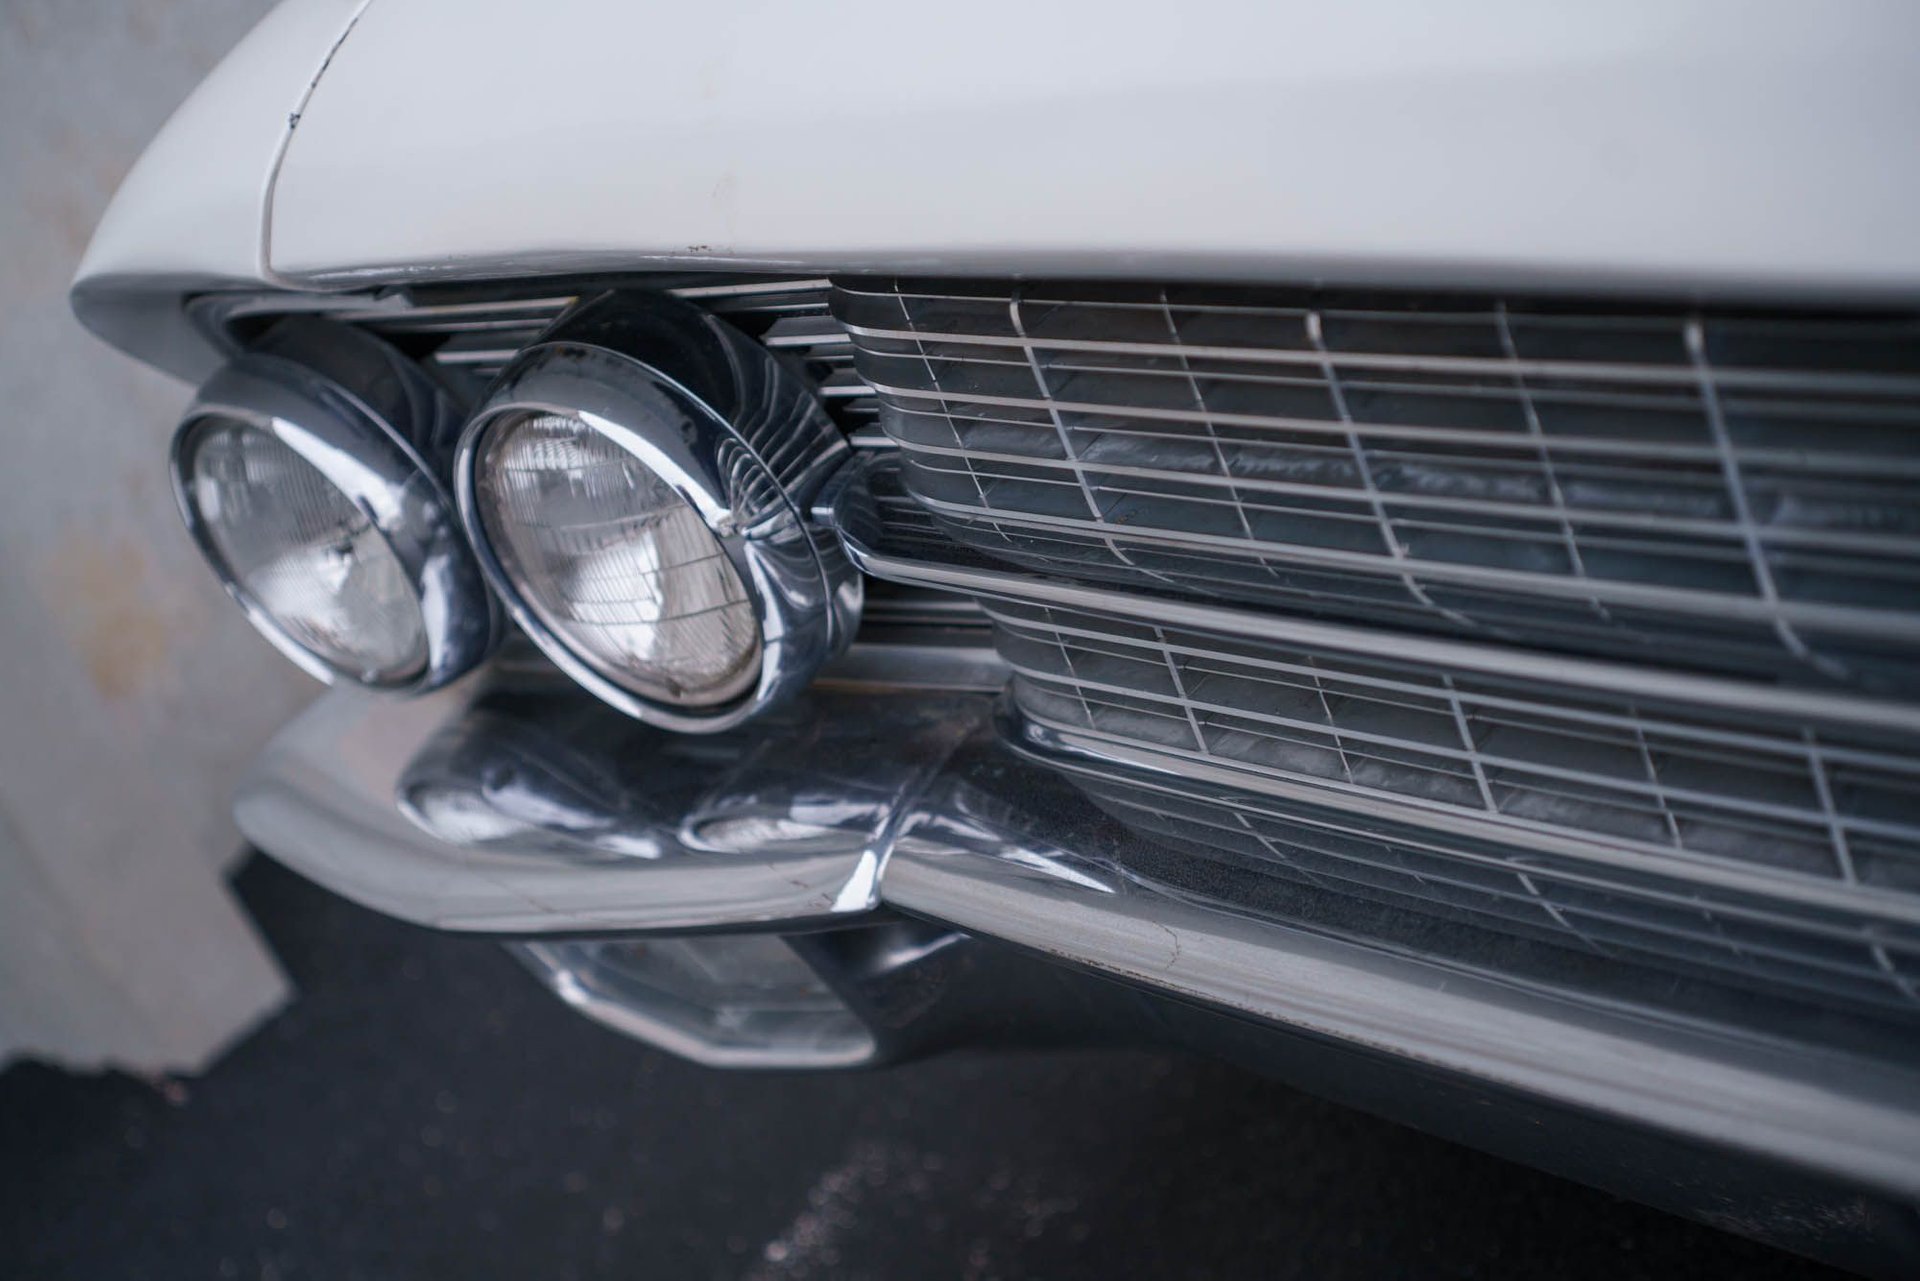 231005 | 1962 Cadillac DeVille | Motoexotica Classic Cars